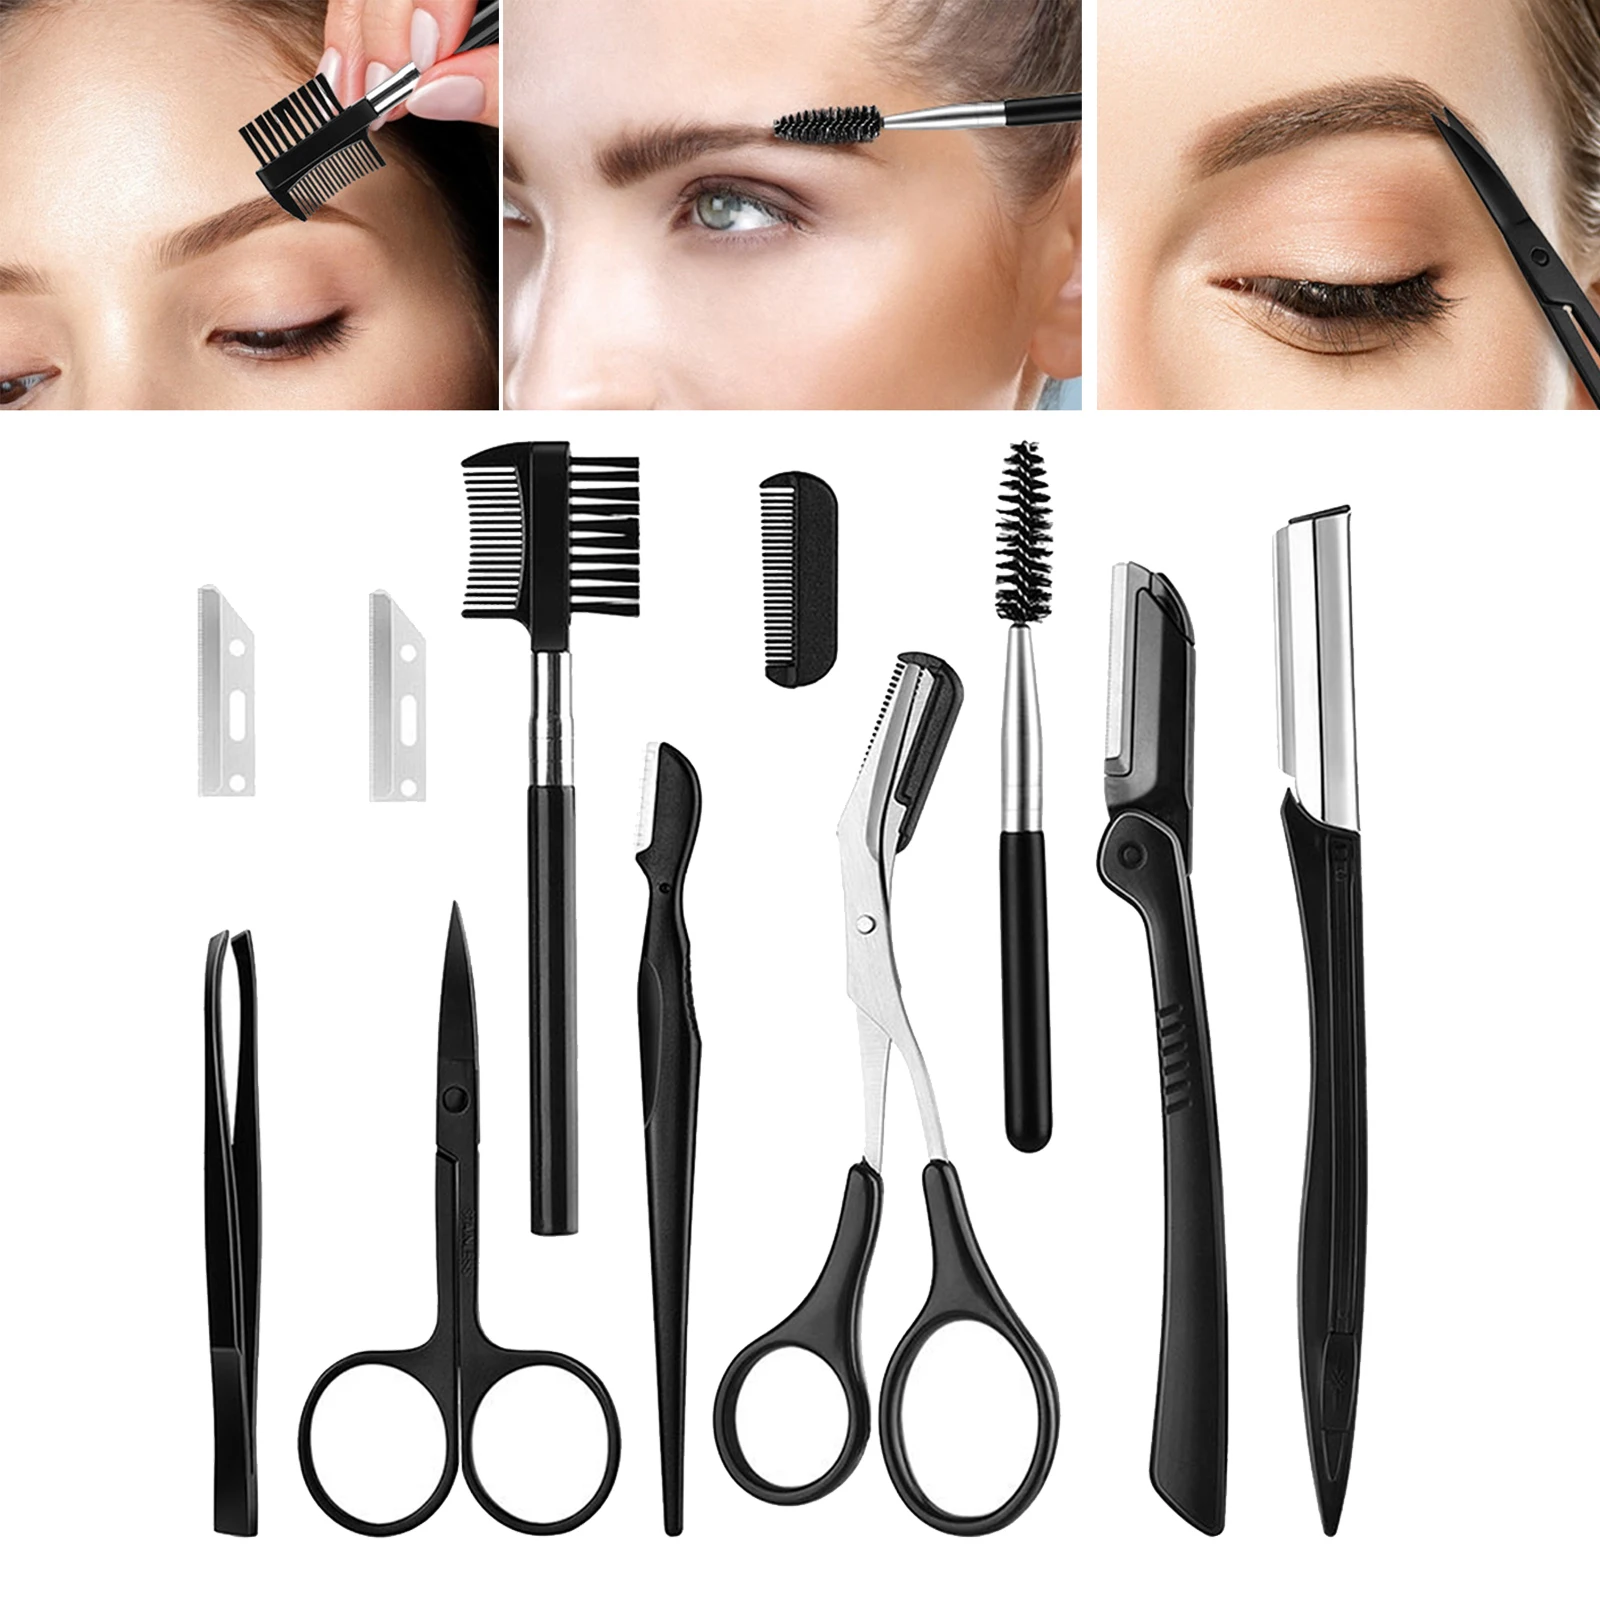 11 Pcs Eyebrow Trimming Kit Includes Eyebrow Scissors, Tweezer, Eyebrow Razor, Shaping Scissors Brush Comb for Women & Men